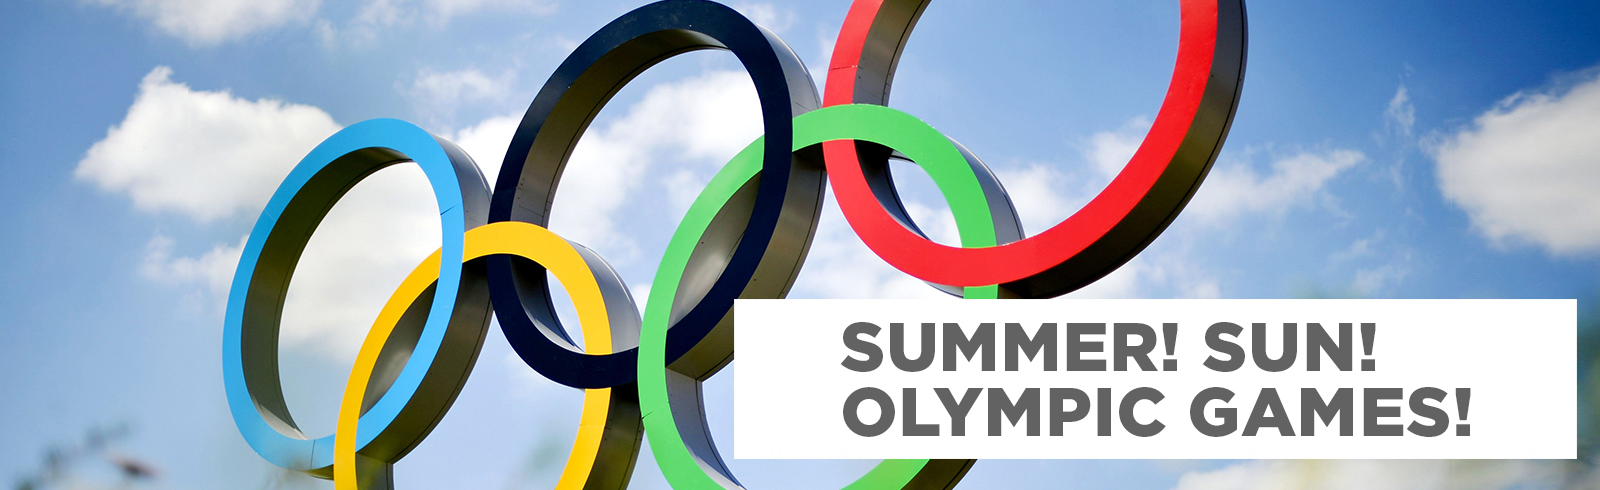 Summer! Sun! Olympic Games!